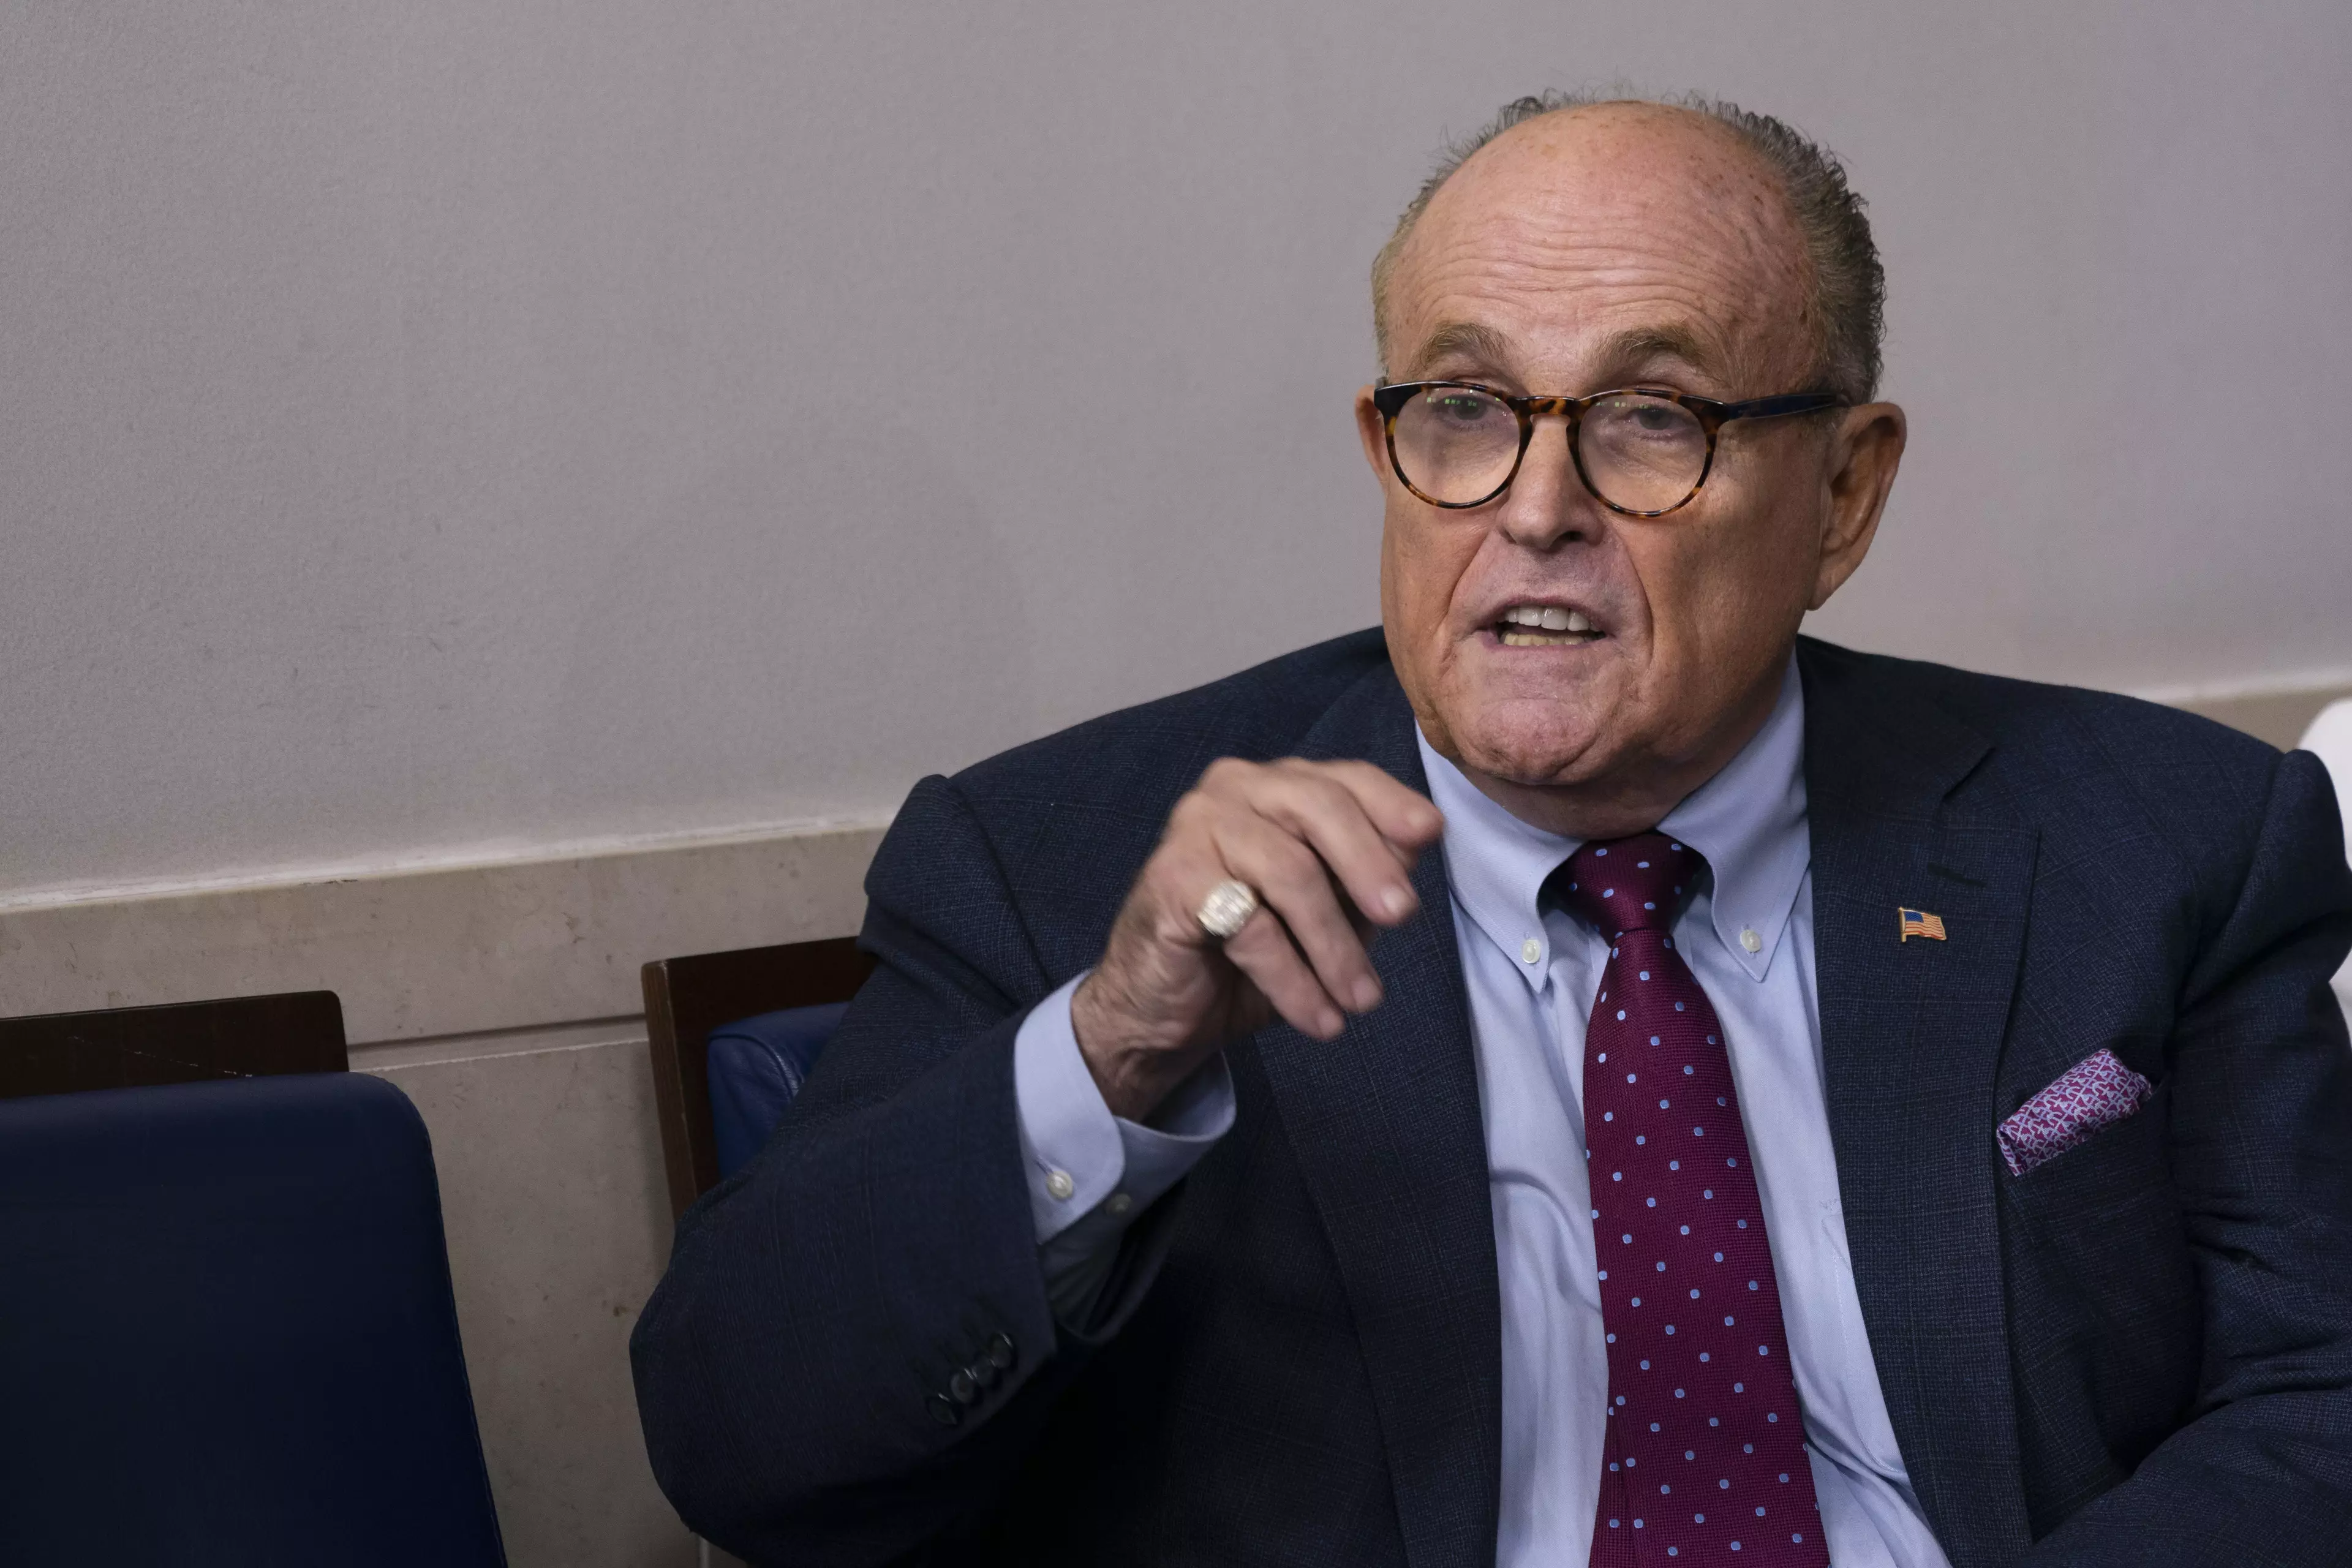 Giuliani has denied any wrongdoing.